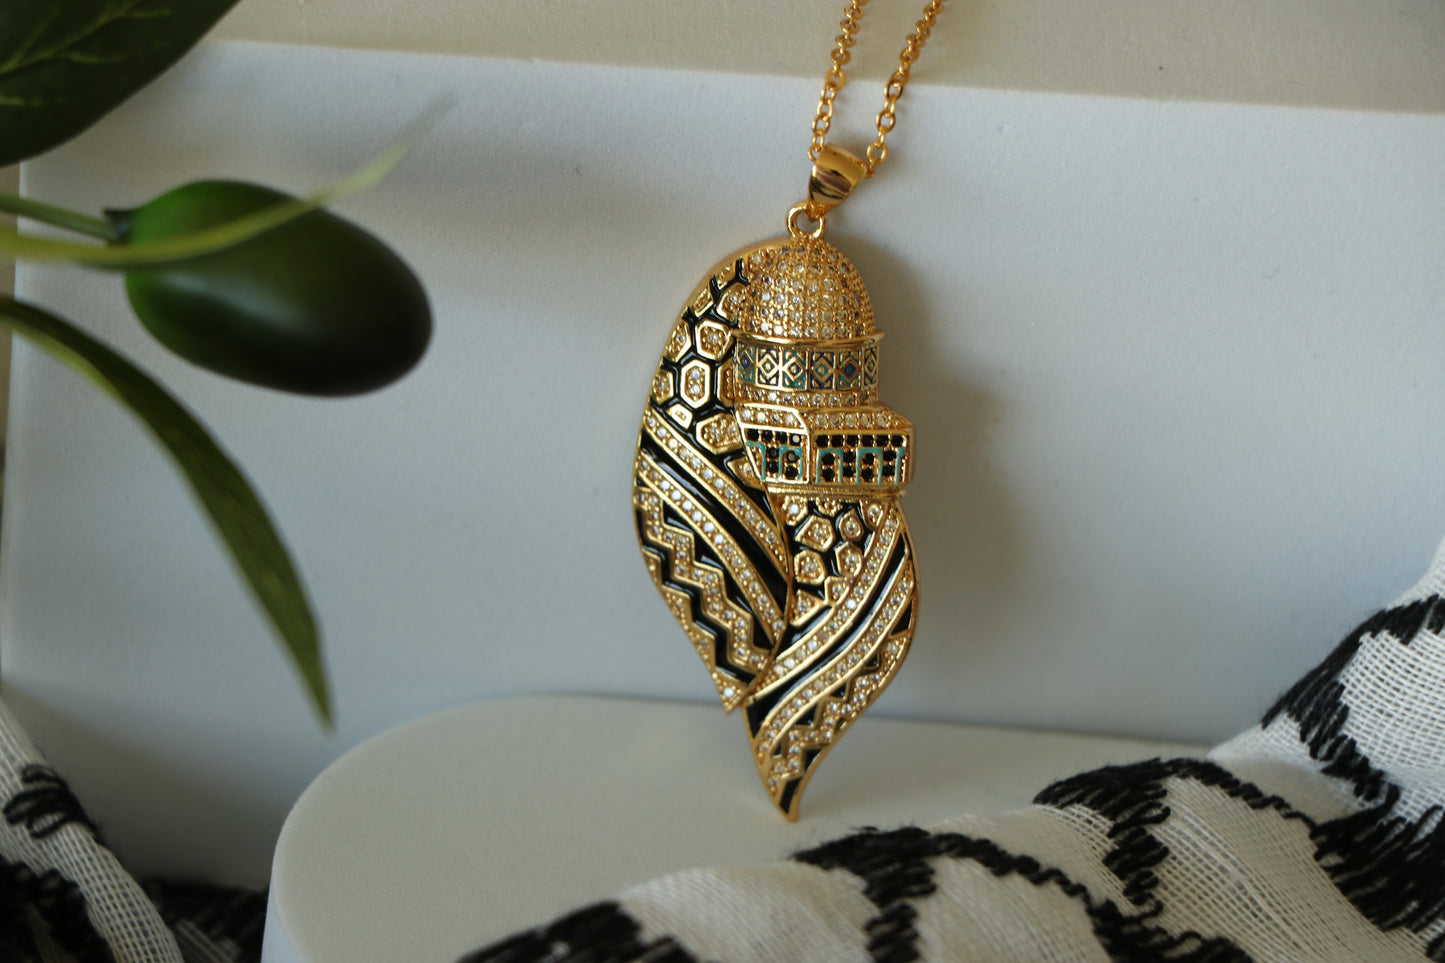 Luxury Golden Zircon Al-Quds Necklace -Pendant of the Al-Aqsa Mosque With Palestinian Keffiyeh Scarf -Necklace